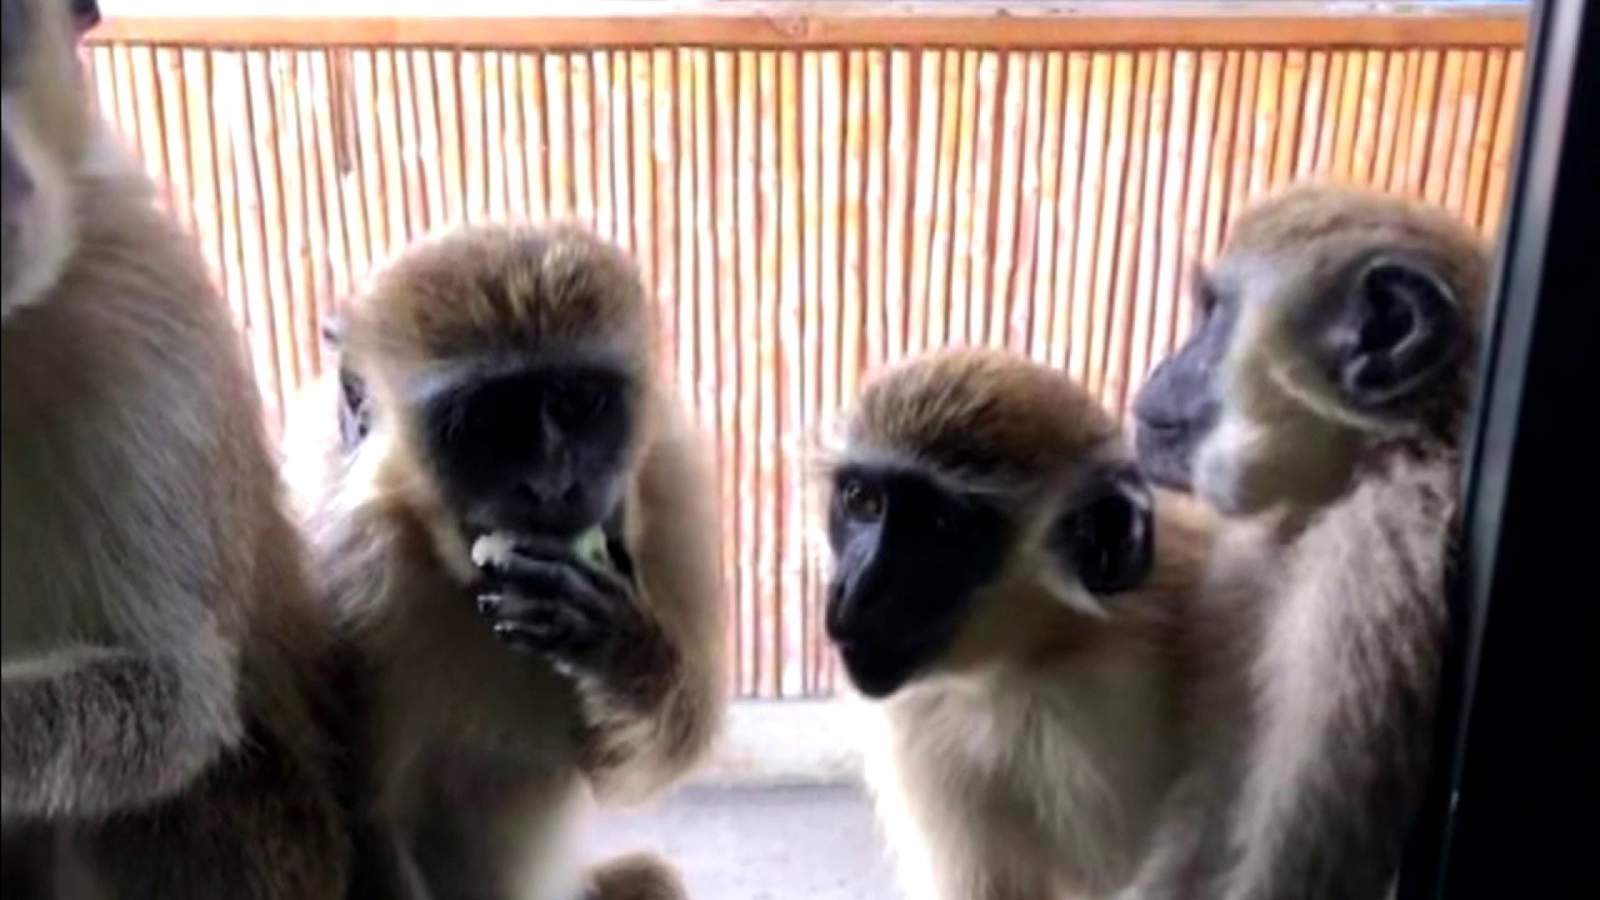 ‘Friendly’ wild vervet monkey colony grows to 40 in Dania Beach, researcher says